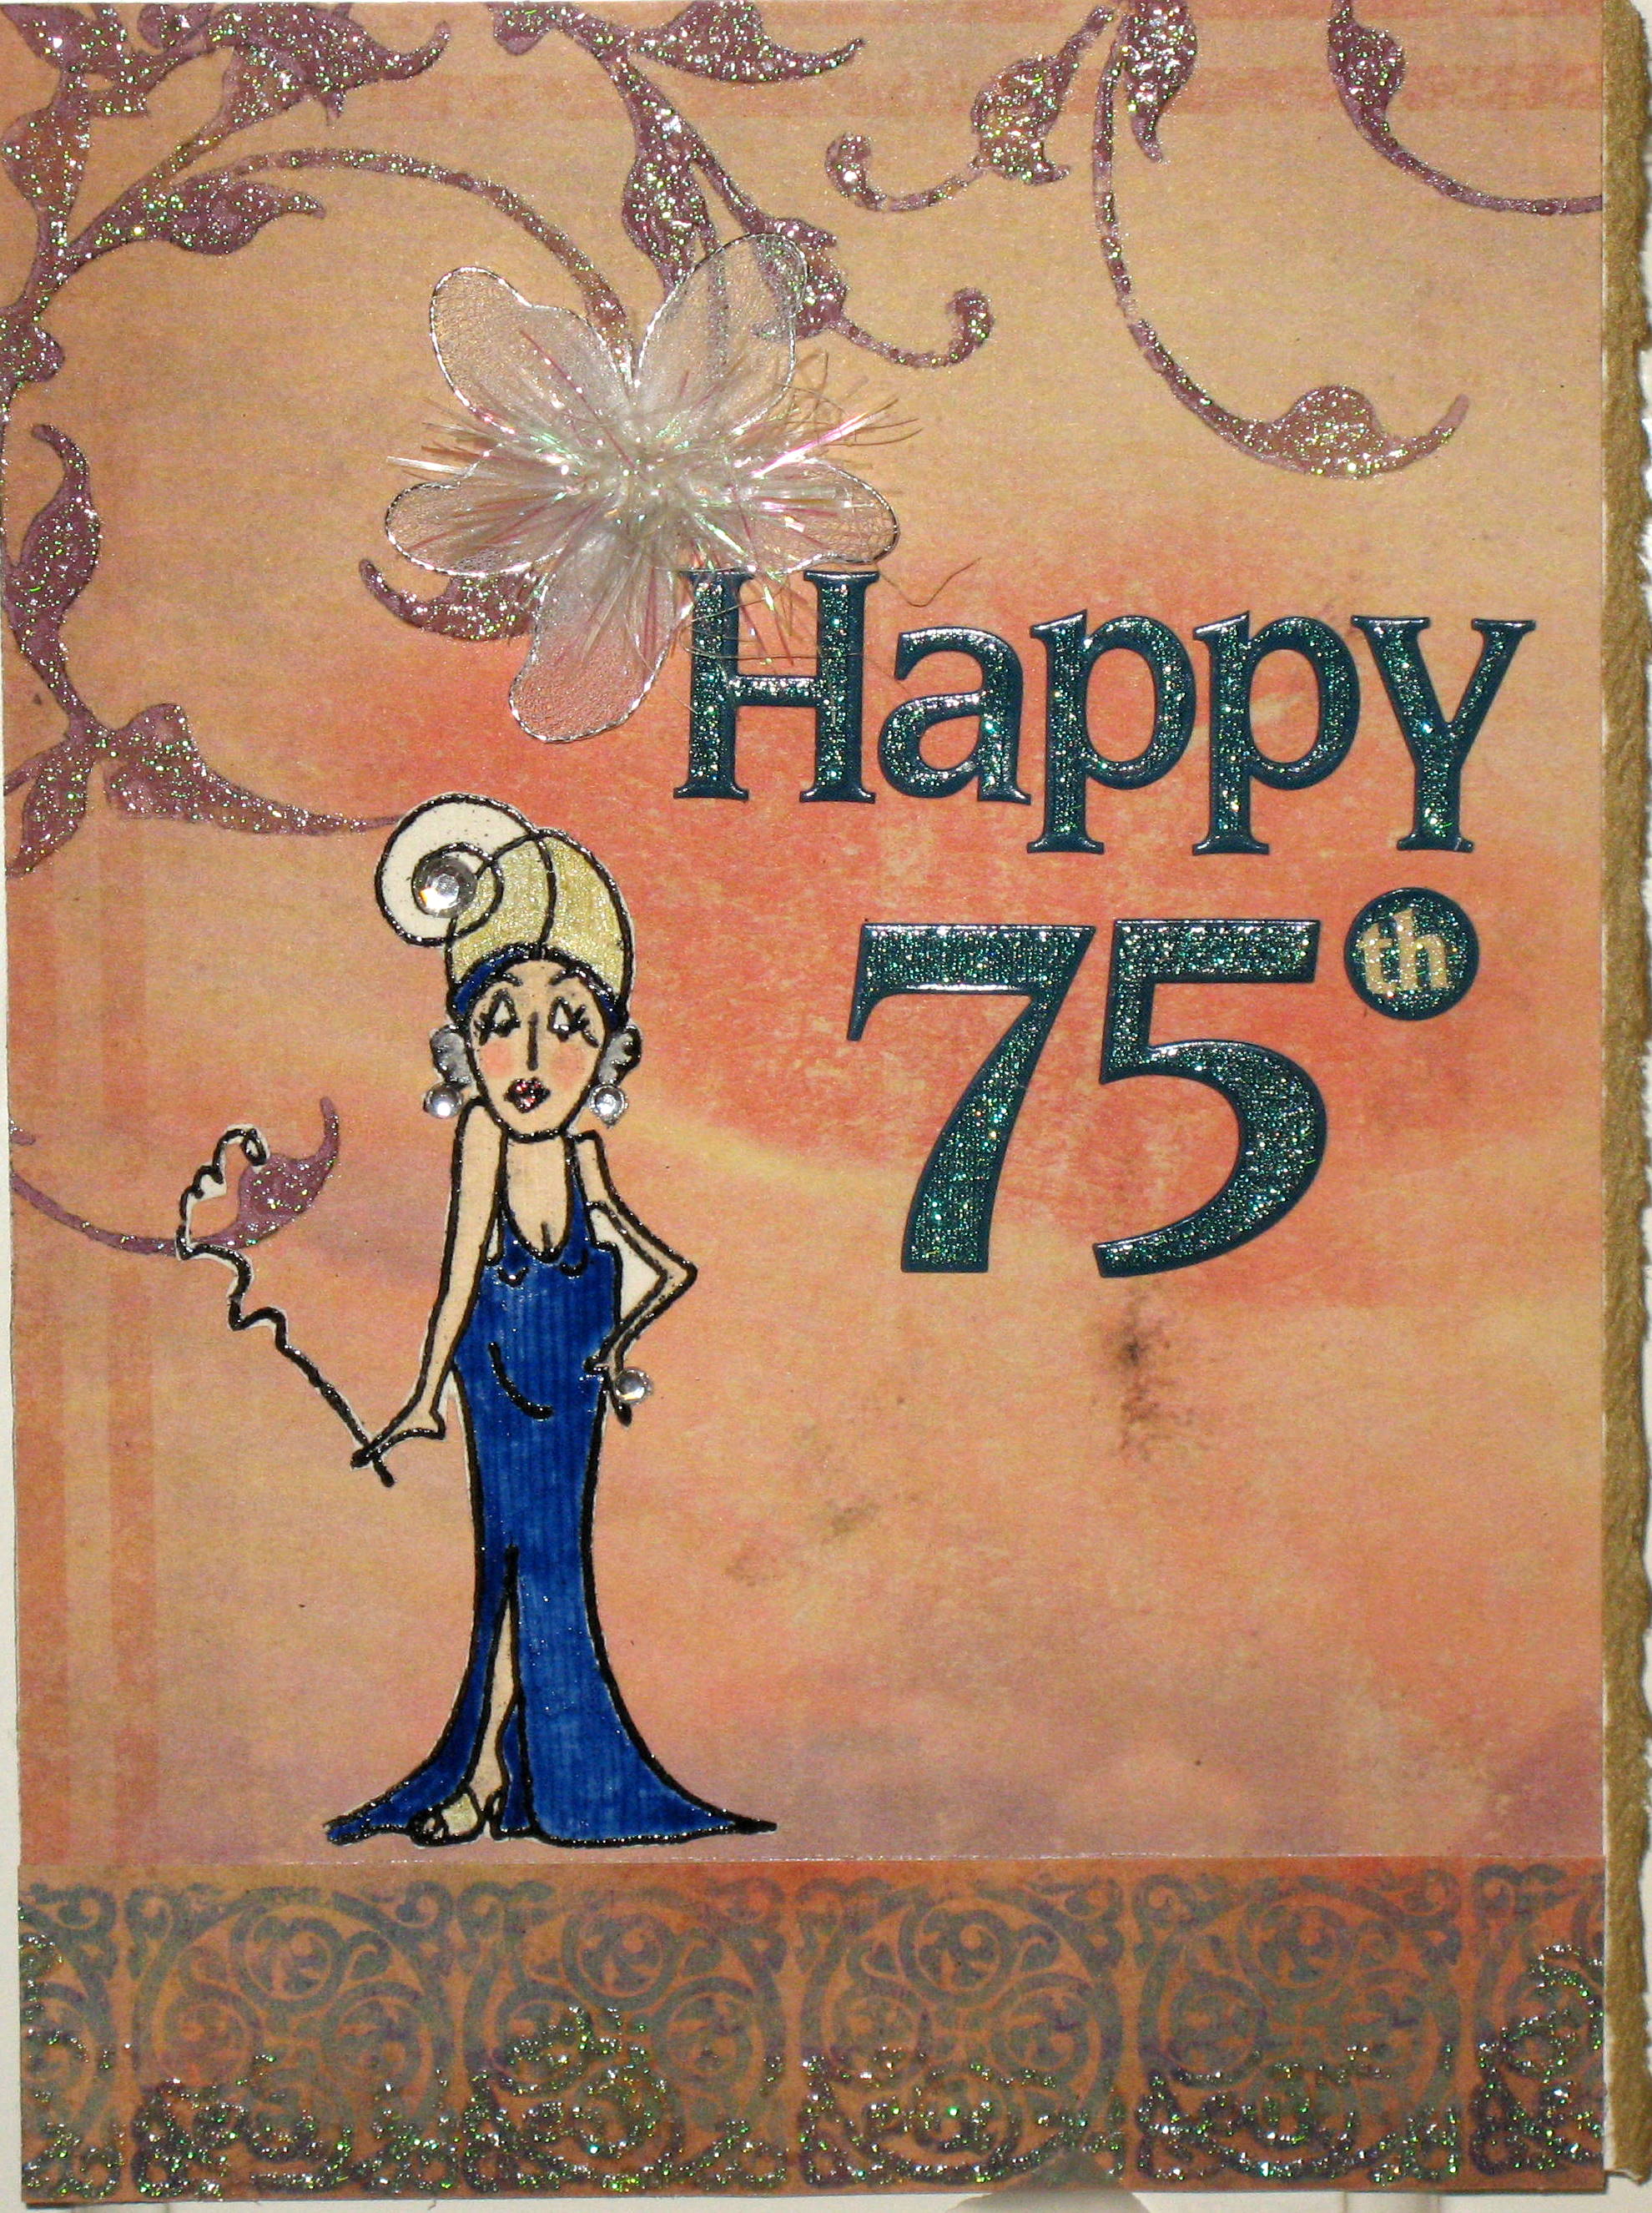 75th-birthday-card